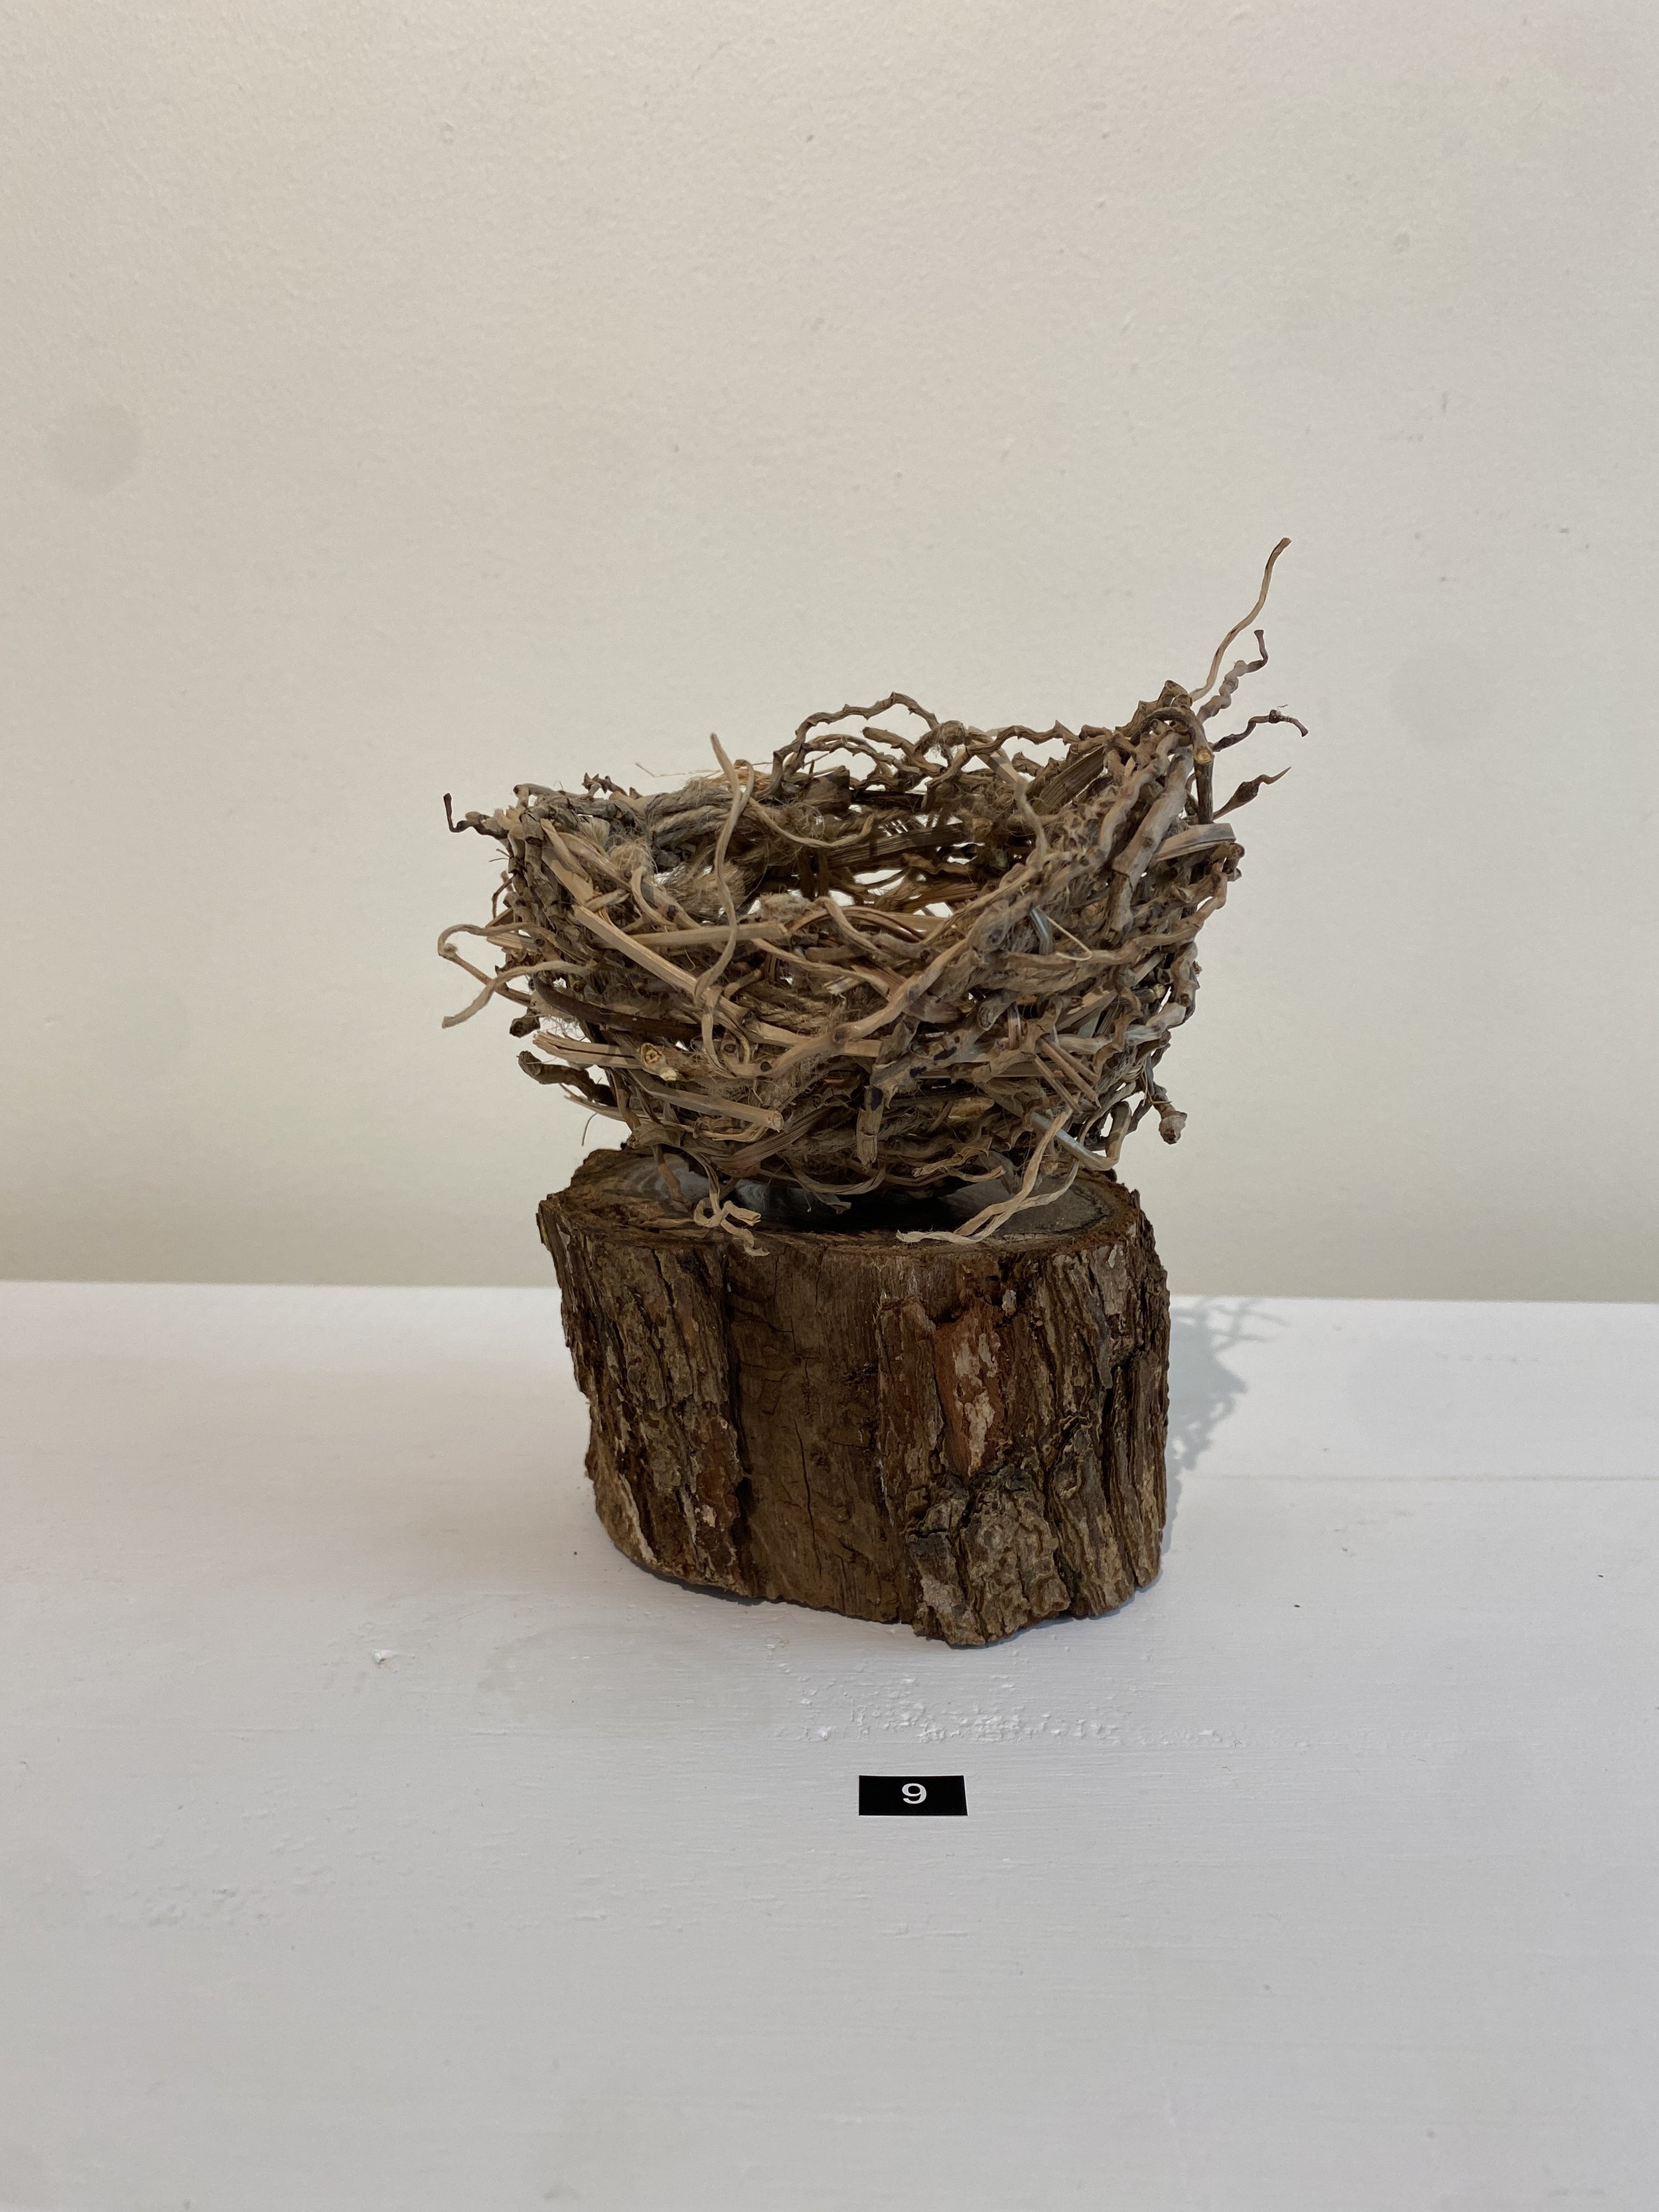 09. Empty Nest on Wood | $42